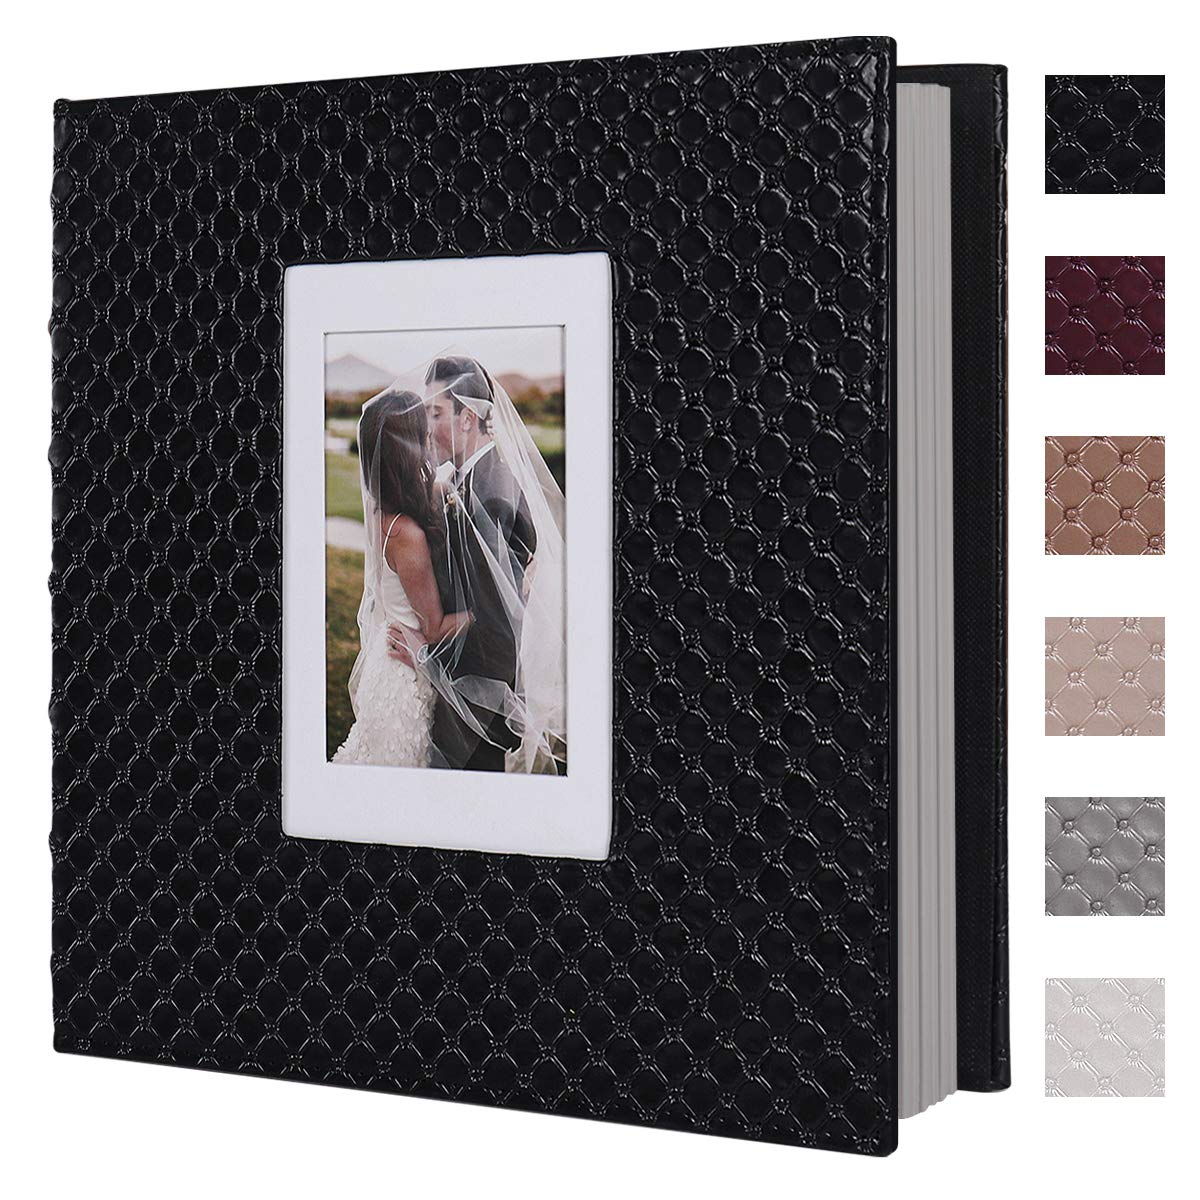 Leather photo Album Self Adhesive Pages, Handamde Leather Scrapbook Photo  Album, Wedding Family Album, Holds 3x5, 4x6, 5x7, 6x8 Photos - Coffee